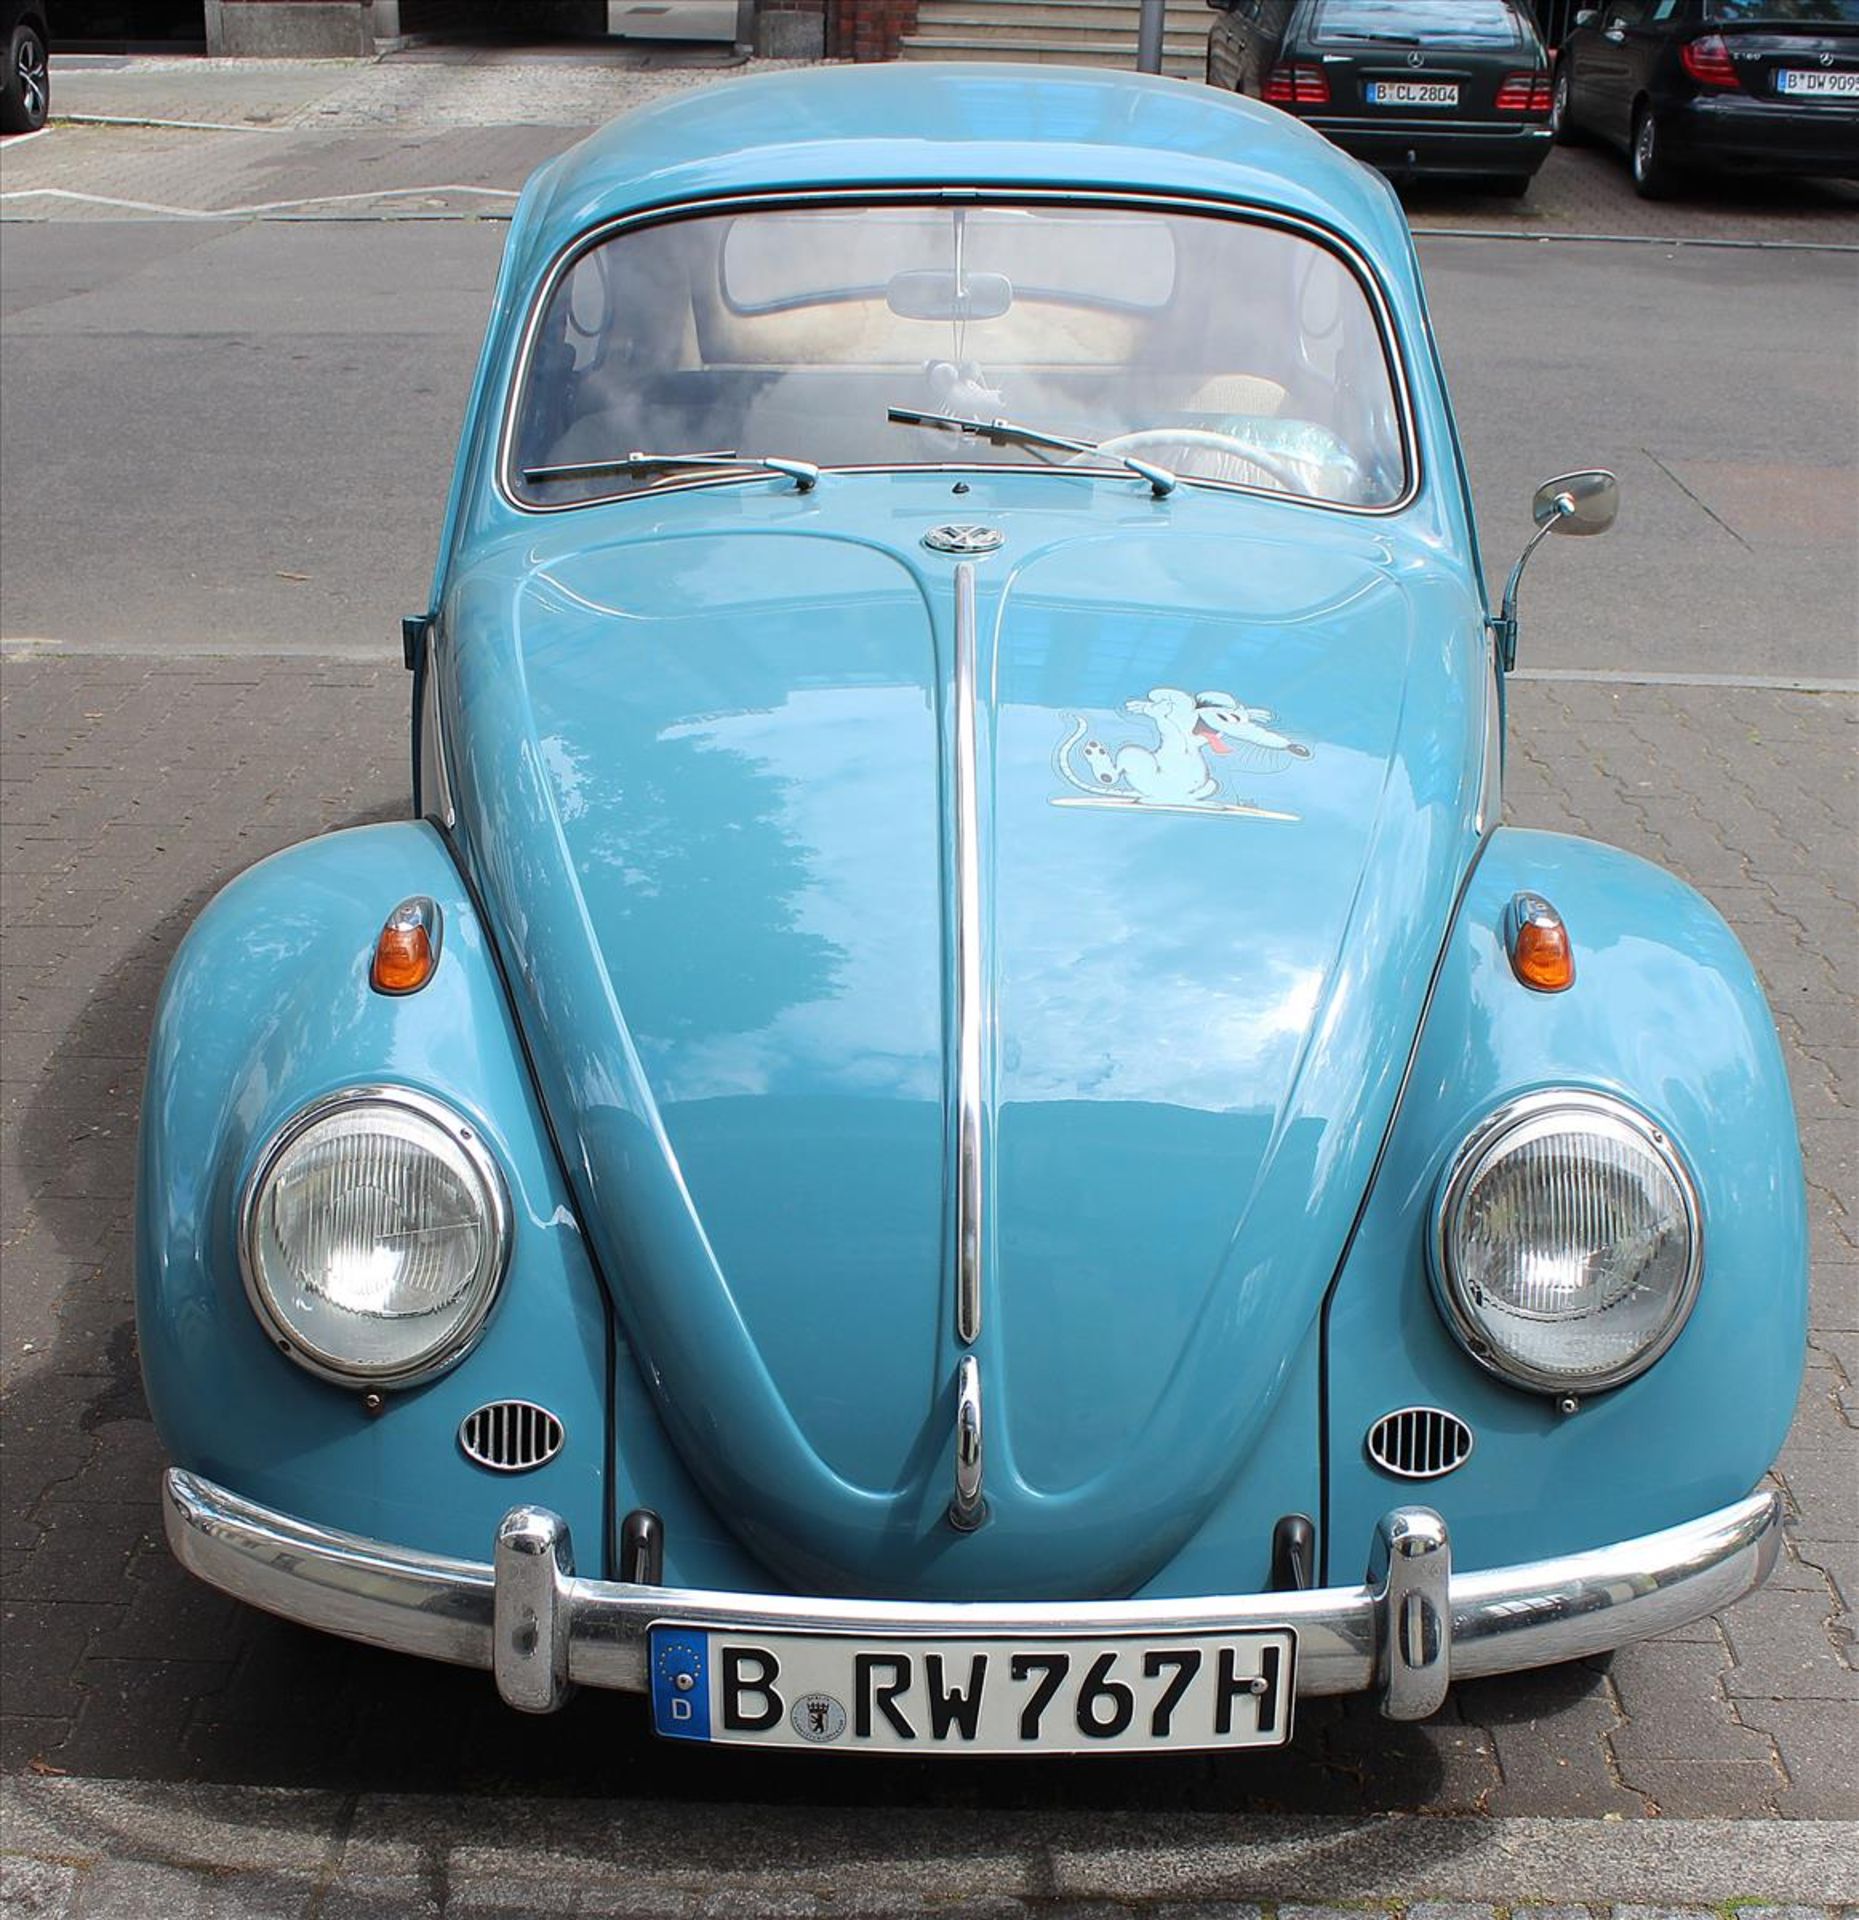 Originaler Käfer-Oldtimer, Volkswagen. - Bild 2 aus 15